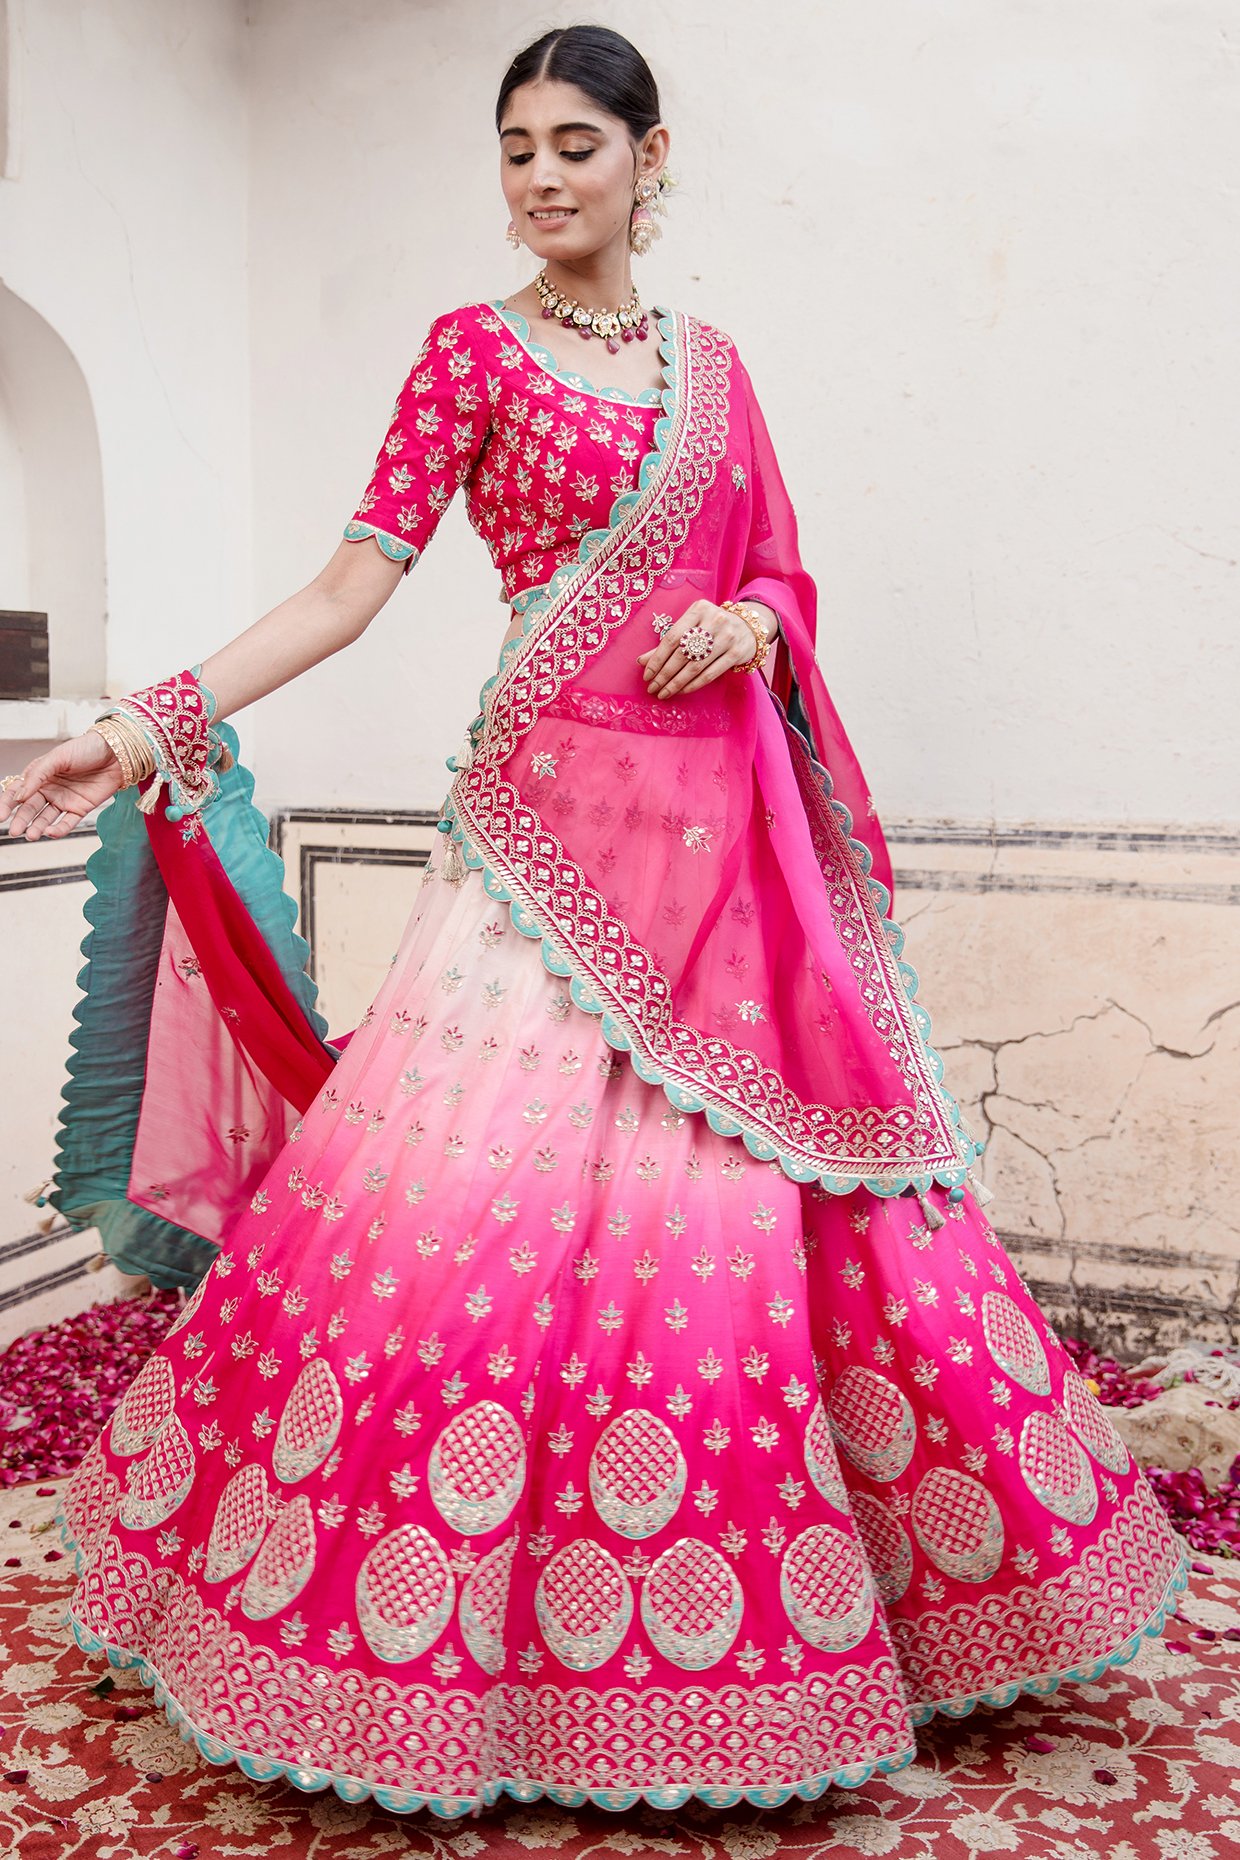 Latest Rani pink lehenga designs for weddings - YouTube